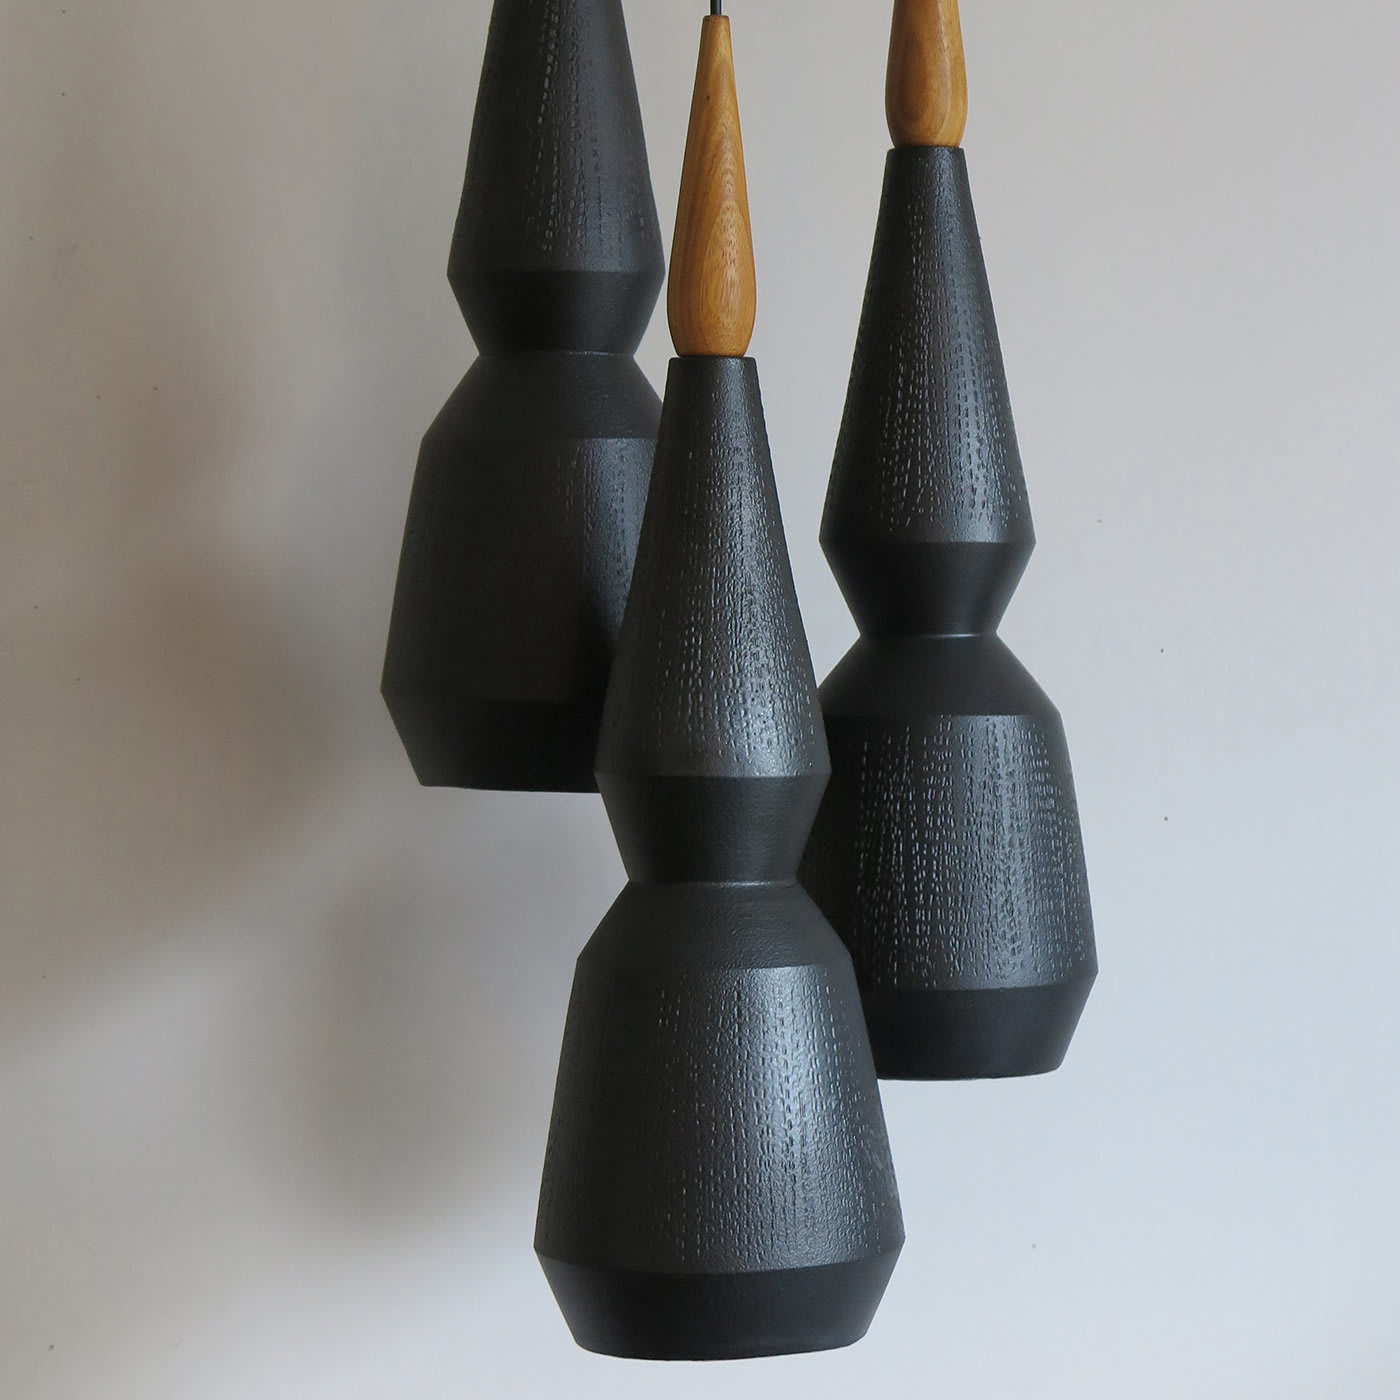 Set of 3 Pendant Lamps in Wood and Ceramics #1 - Capperidicasa